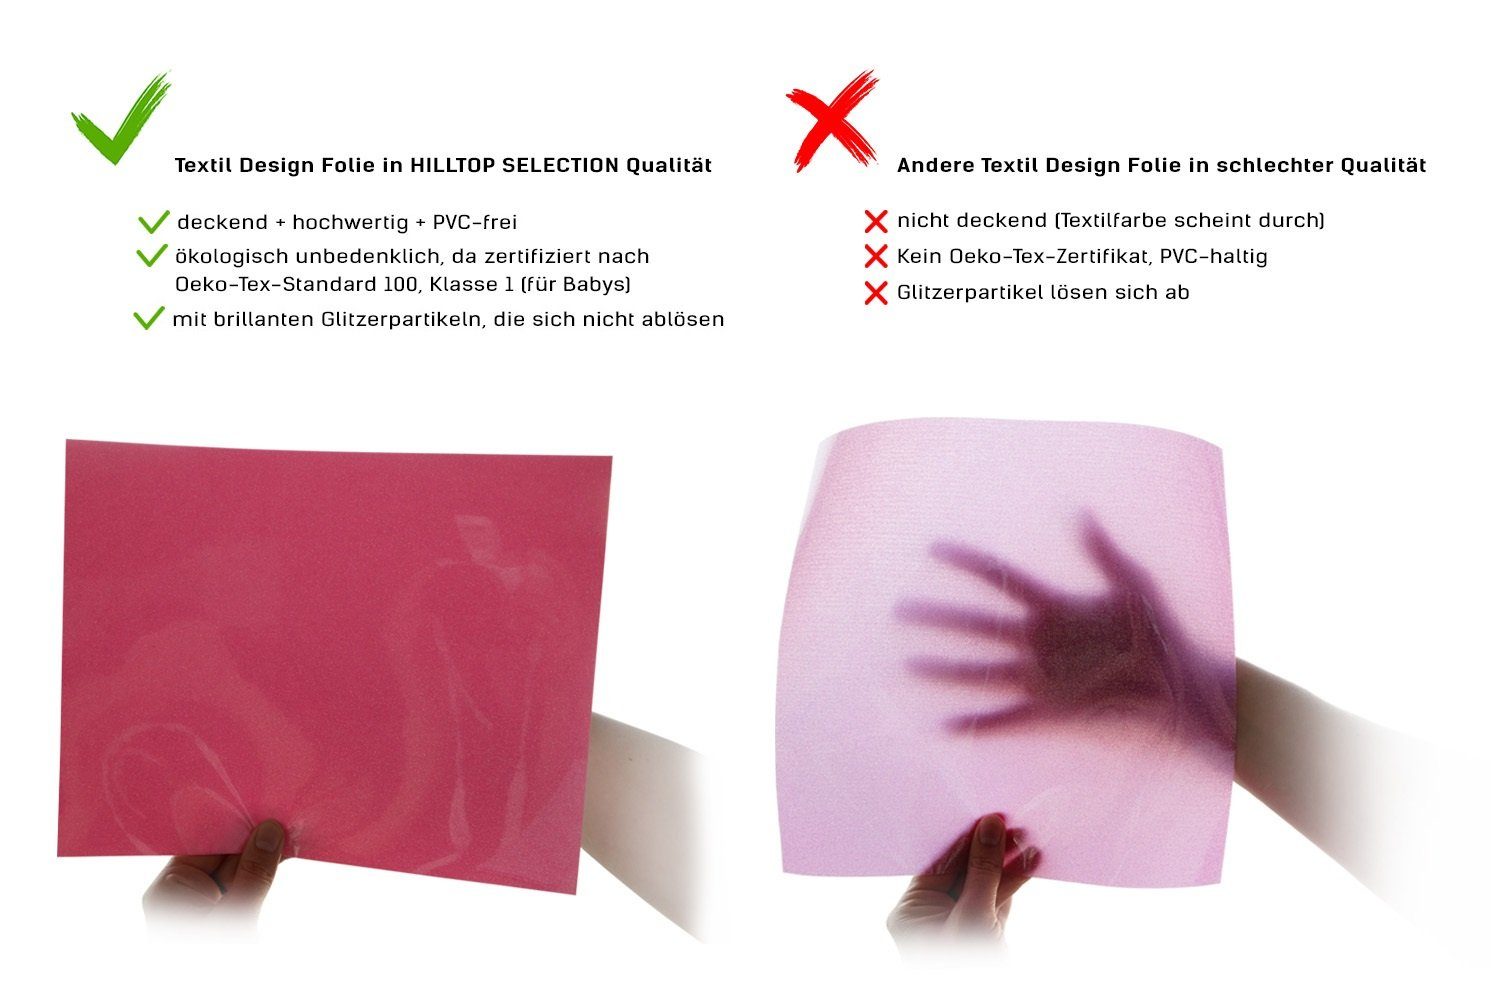 perfekt Neon Plottern zum Pink Transparentpapier Aufbügeln, Glitzer Hilltop Transferfolie/Textilfolie zum